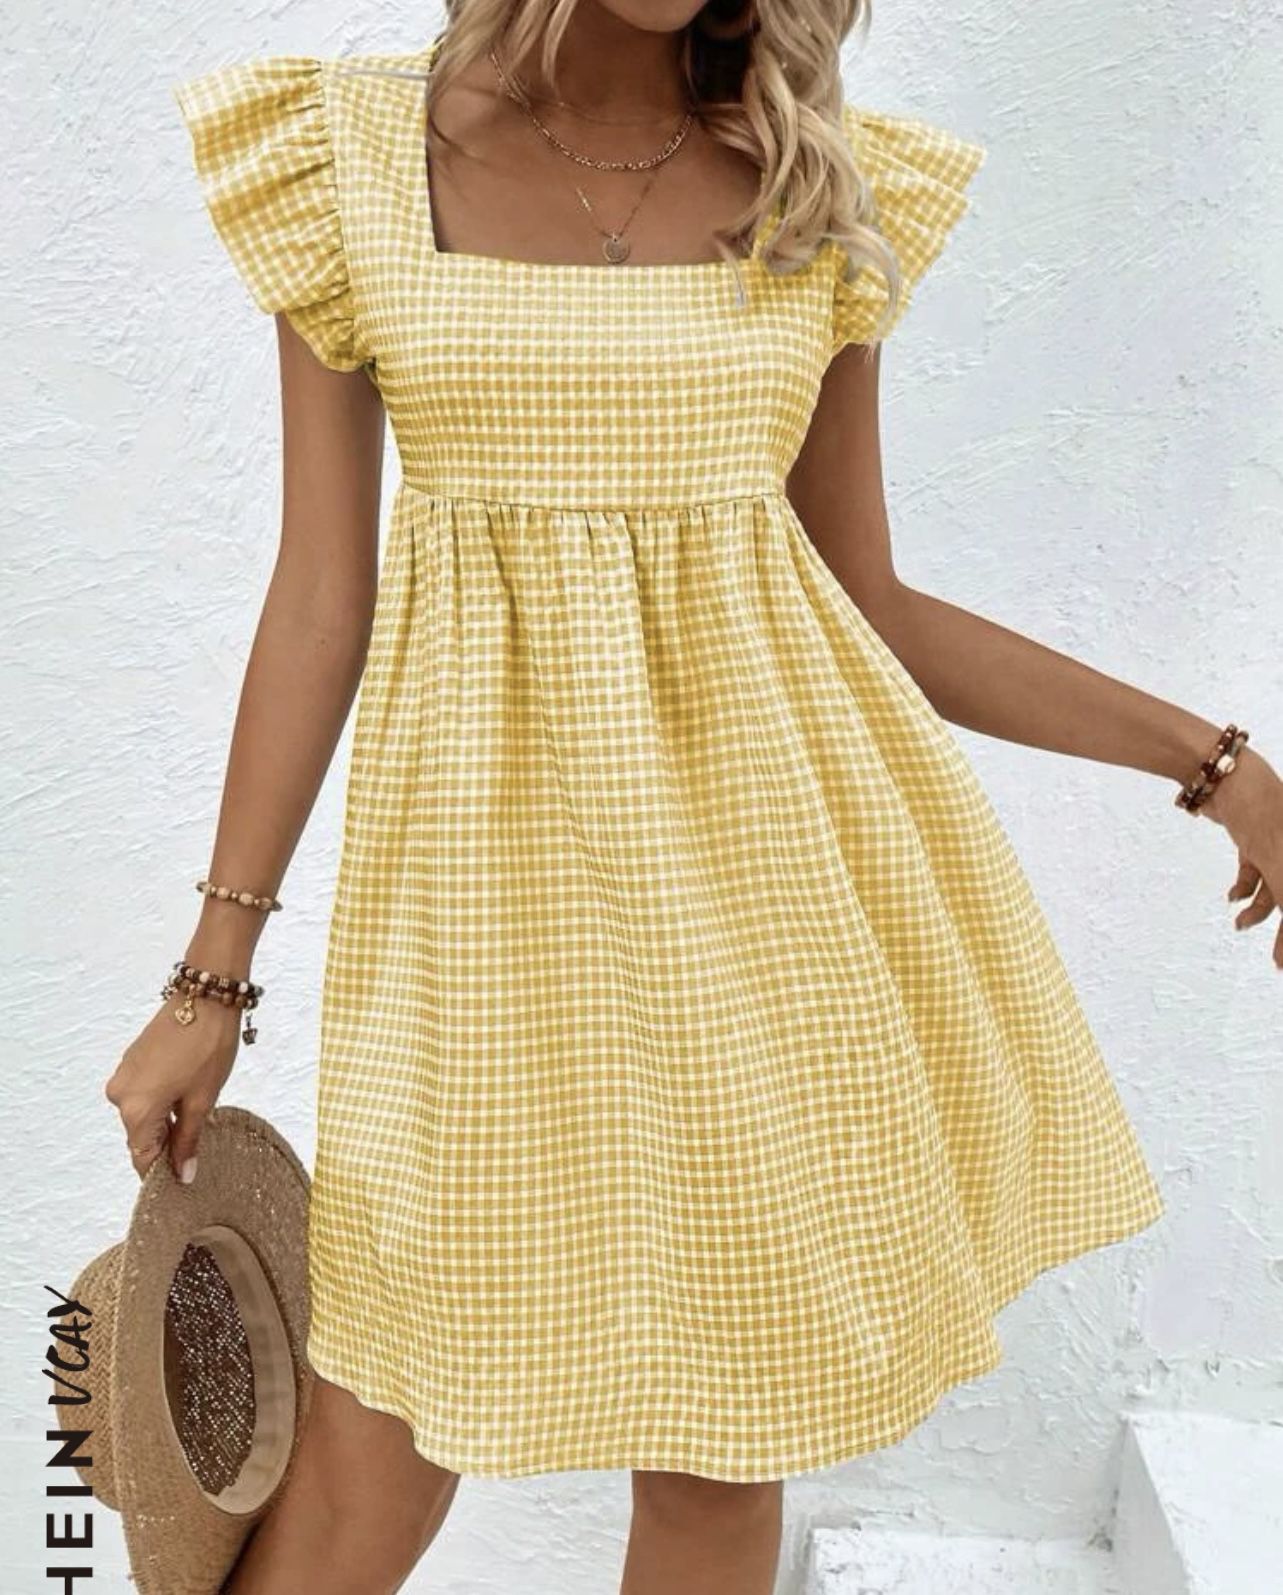 Yellow SHEIN Dress